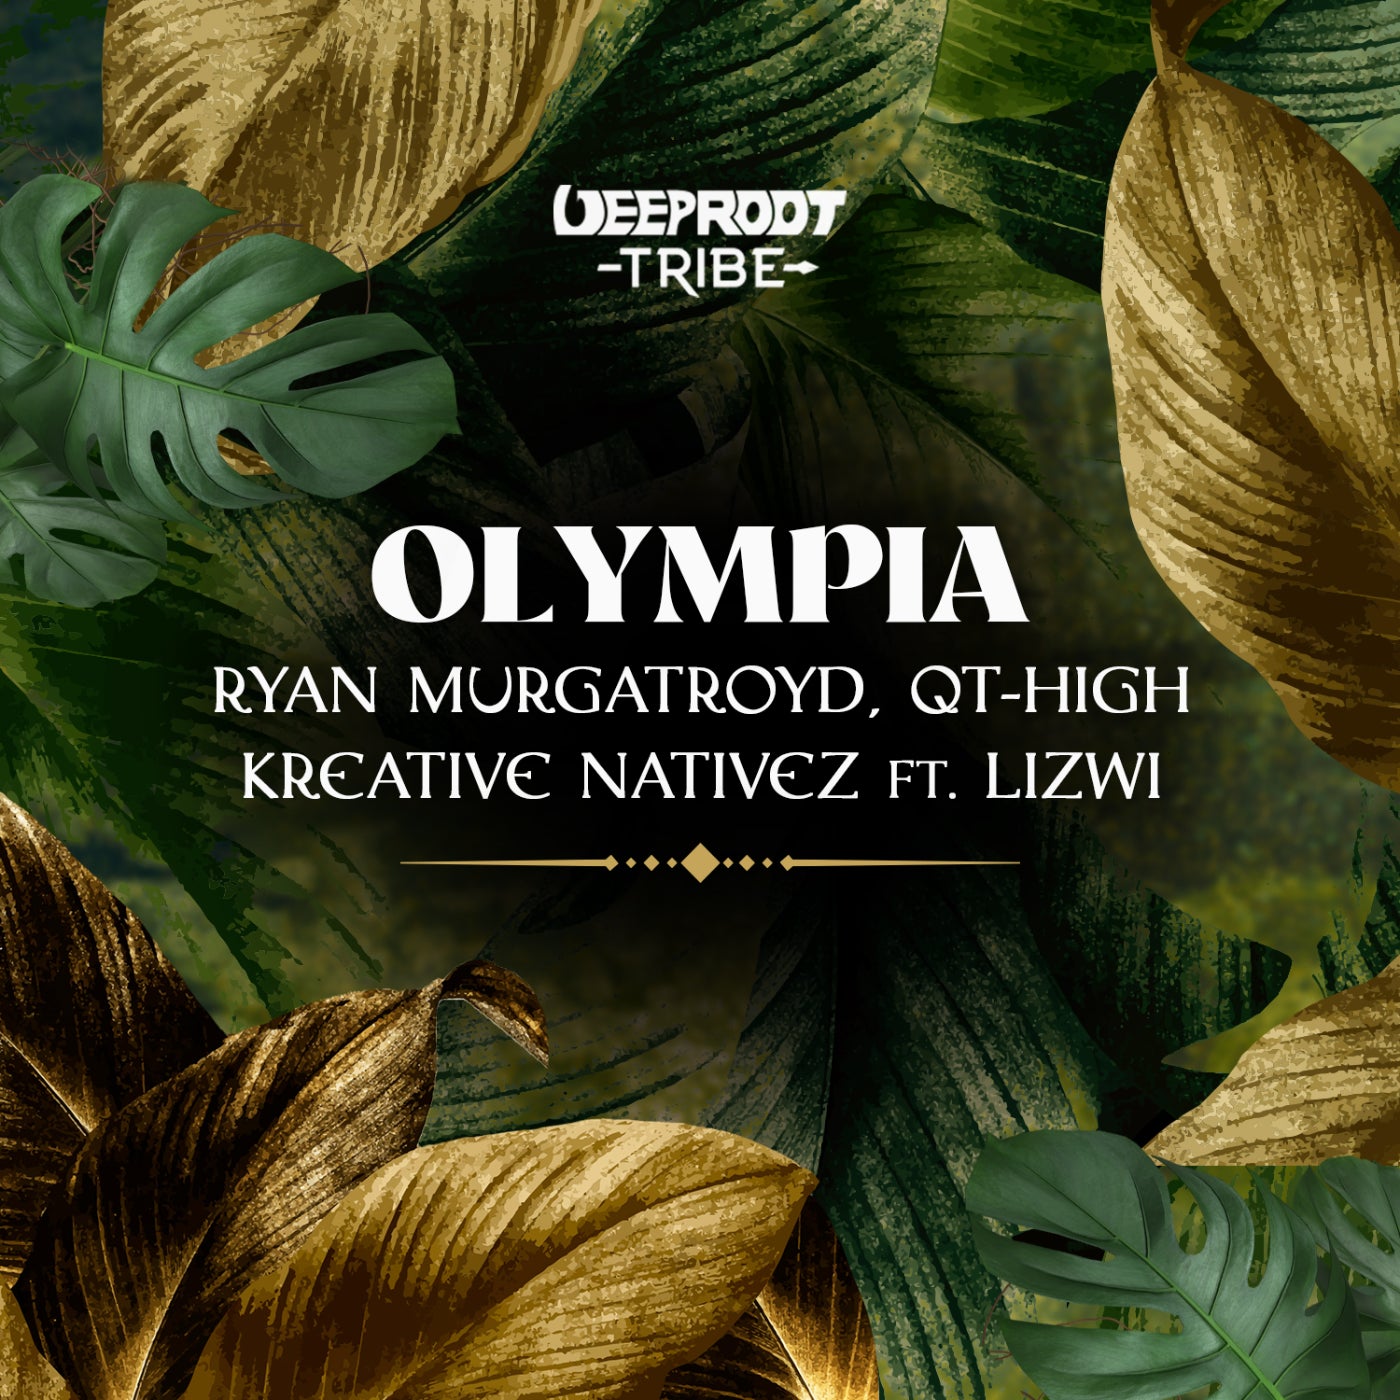 Ryan Murgatroyd, Lizwi, Kreative Nativez, QT-HIGH - Olympia (ft. Lizwi) - Extended Mix on Deep Root Tribe